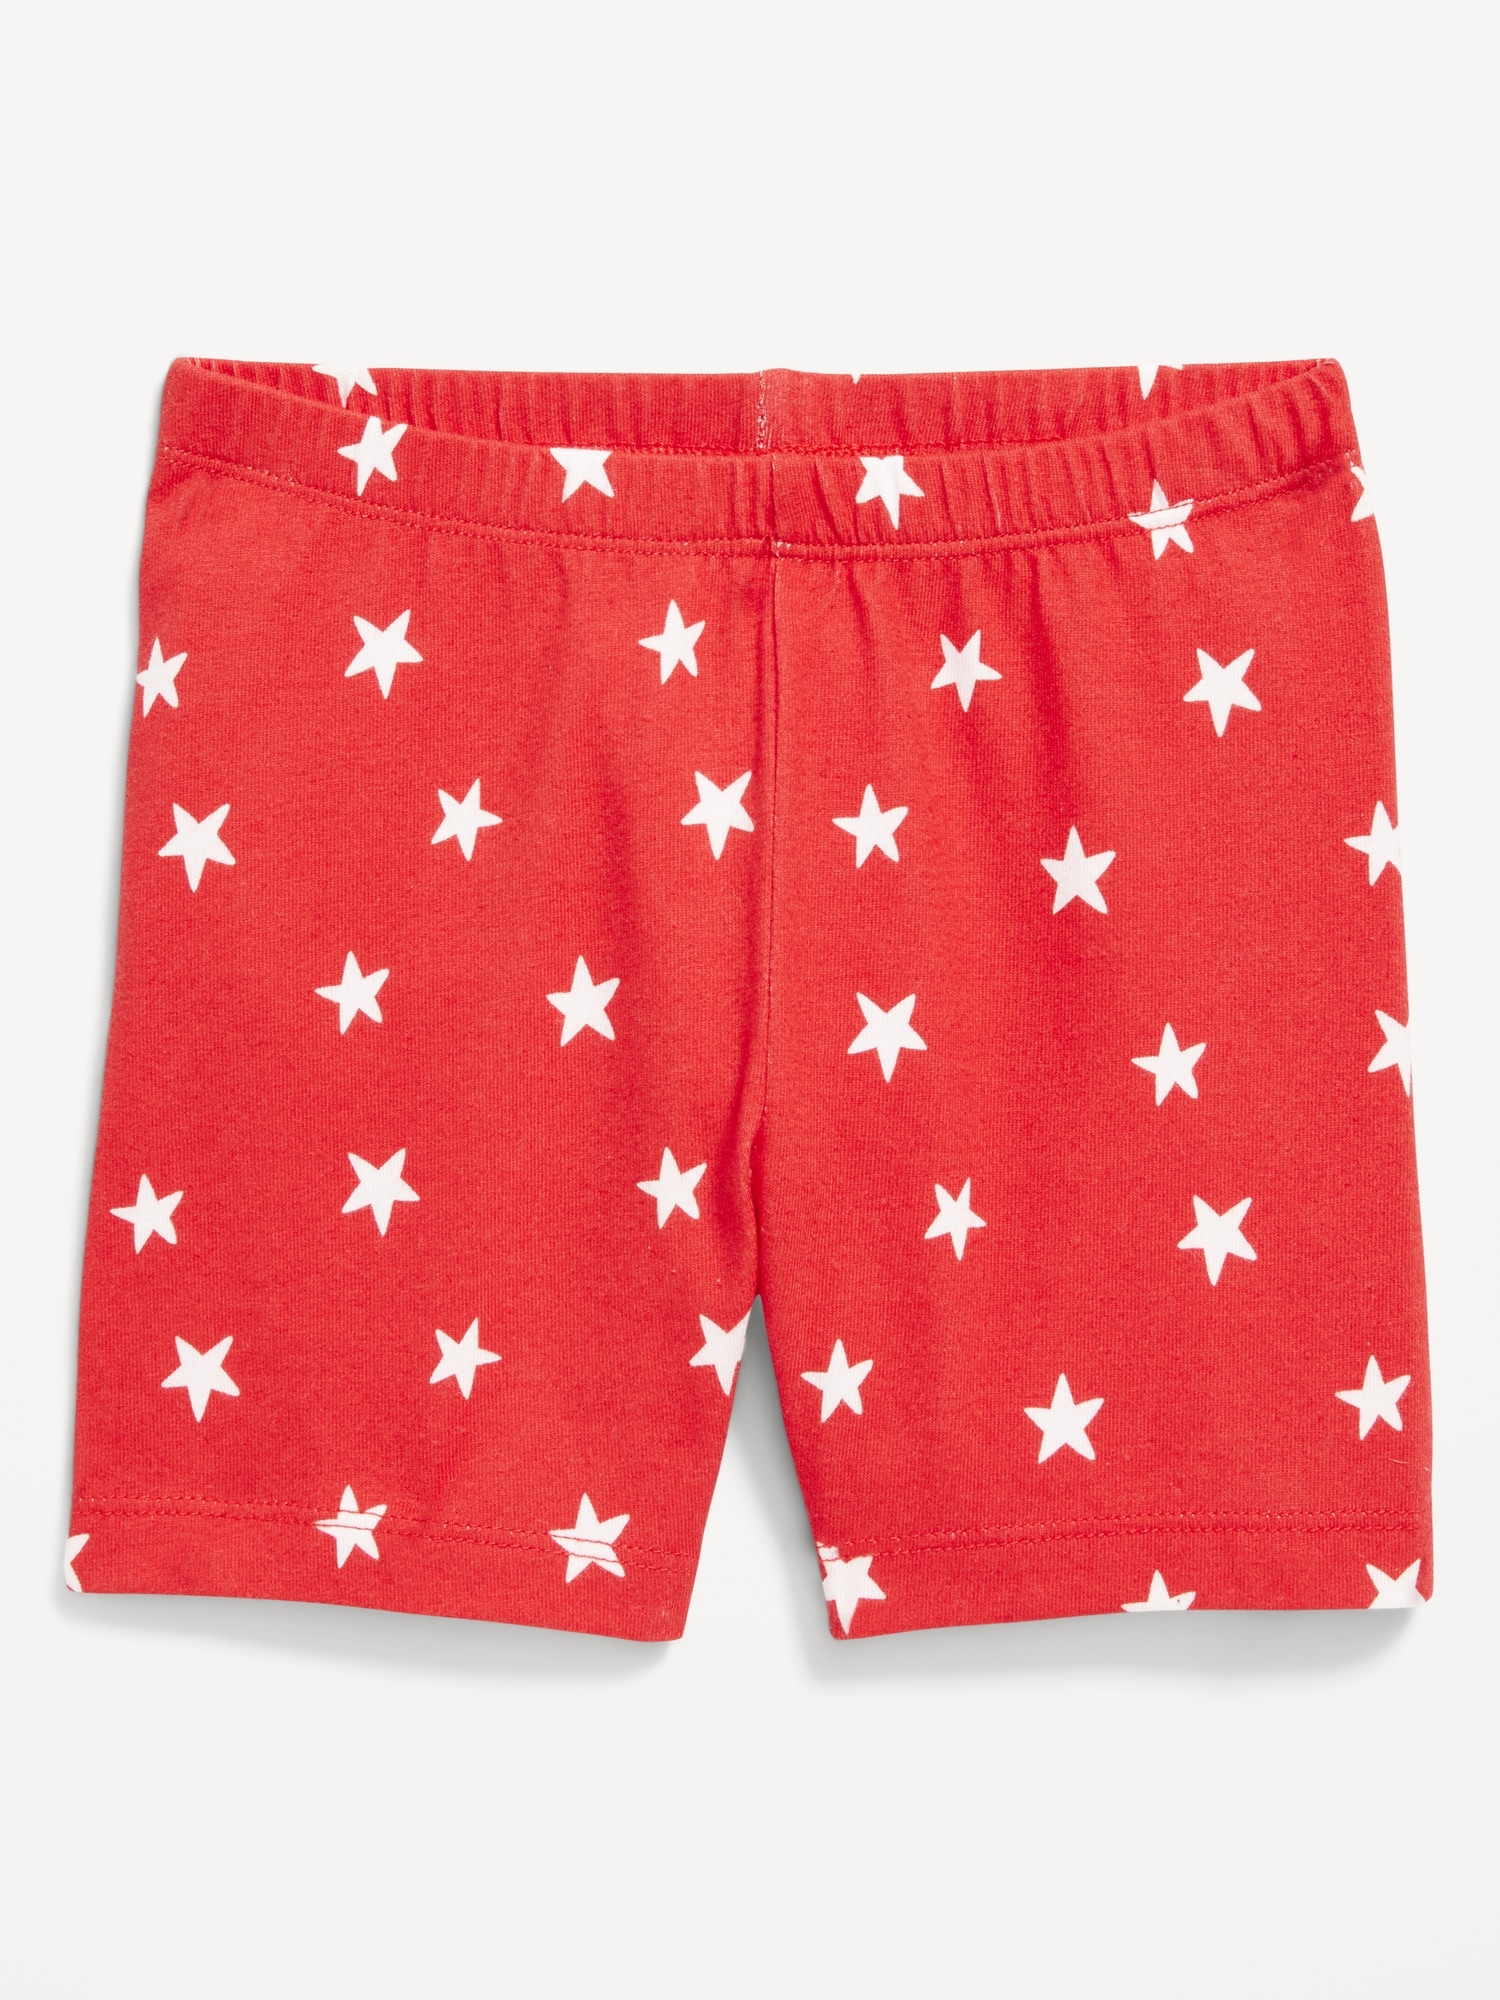 Prime Picks YoungLA Shorts For Him Short Shorts Apparel Red Medium